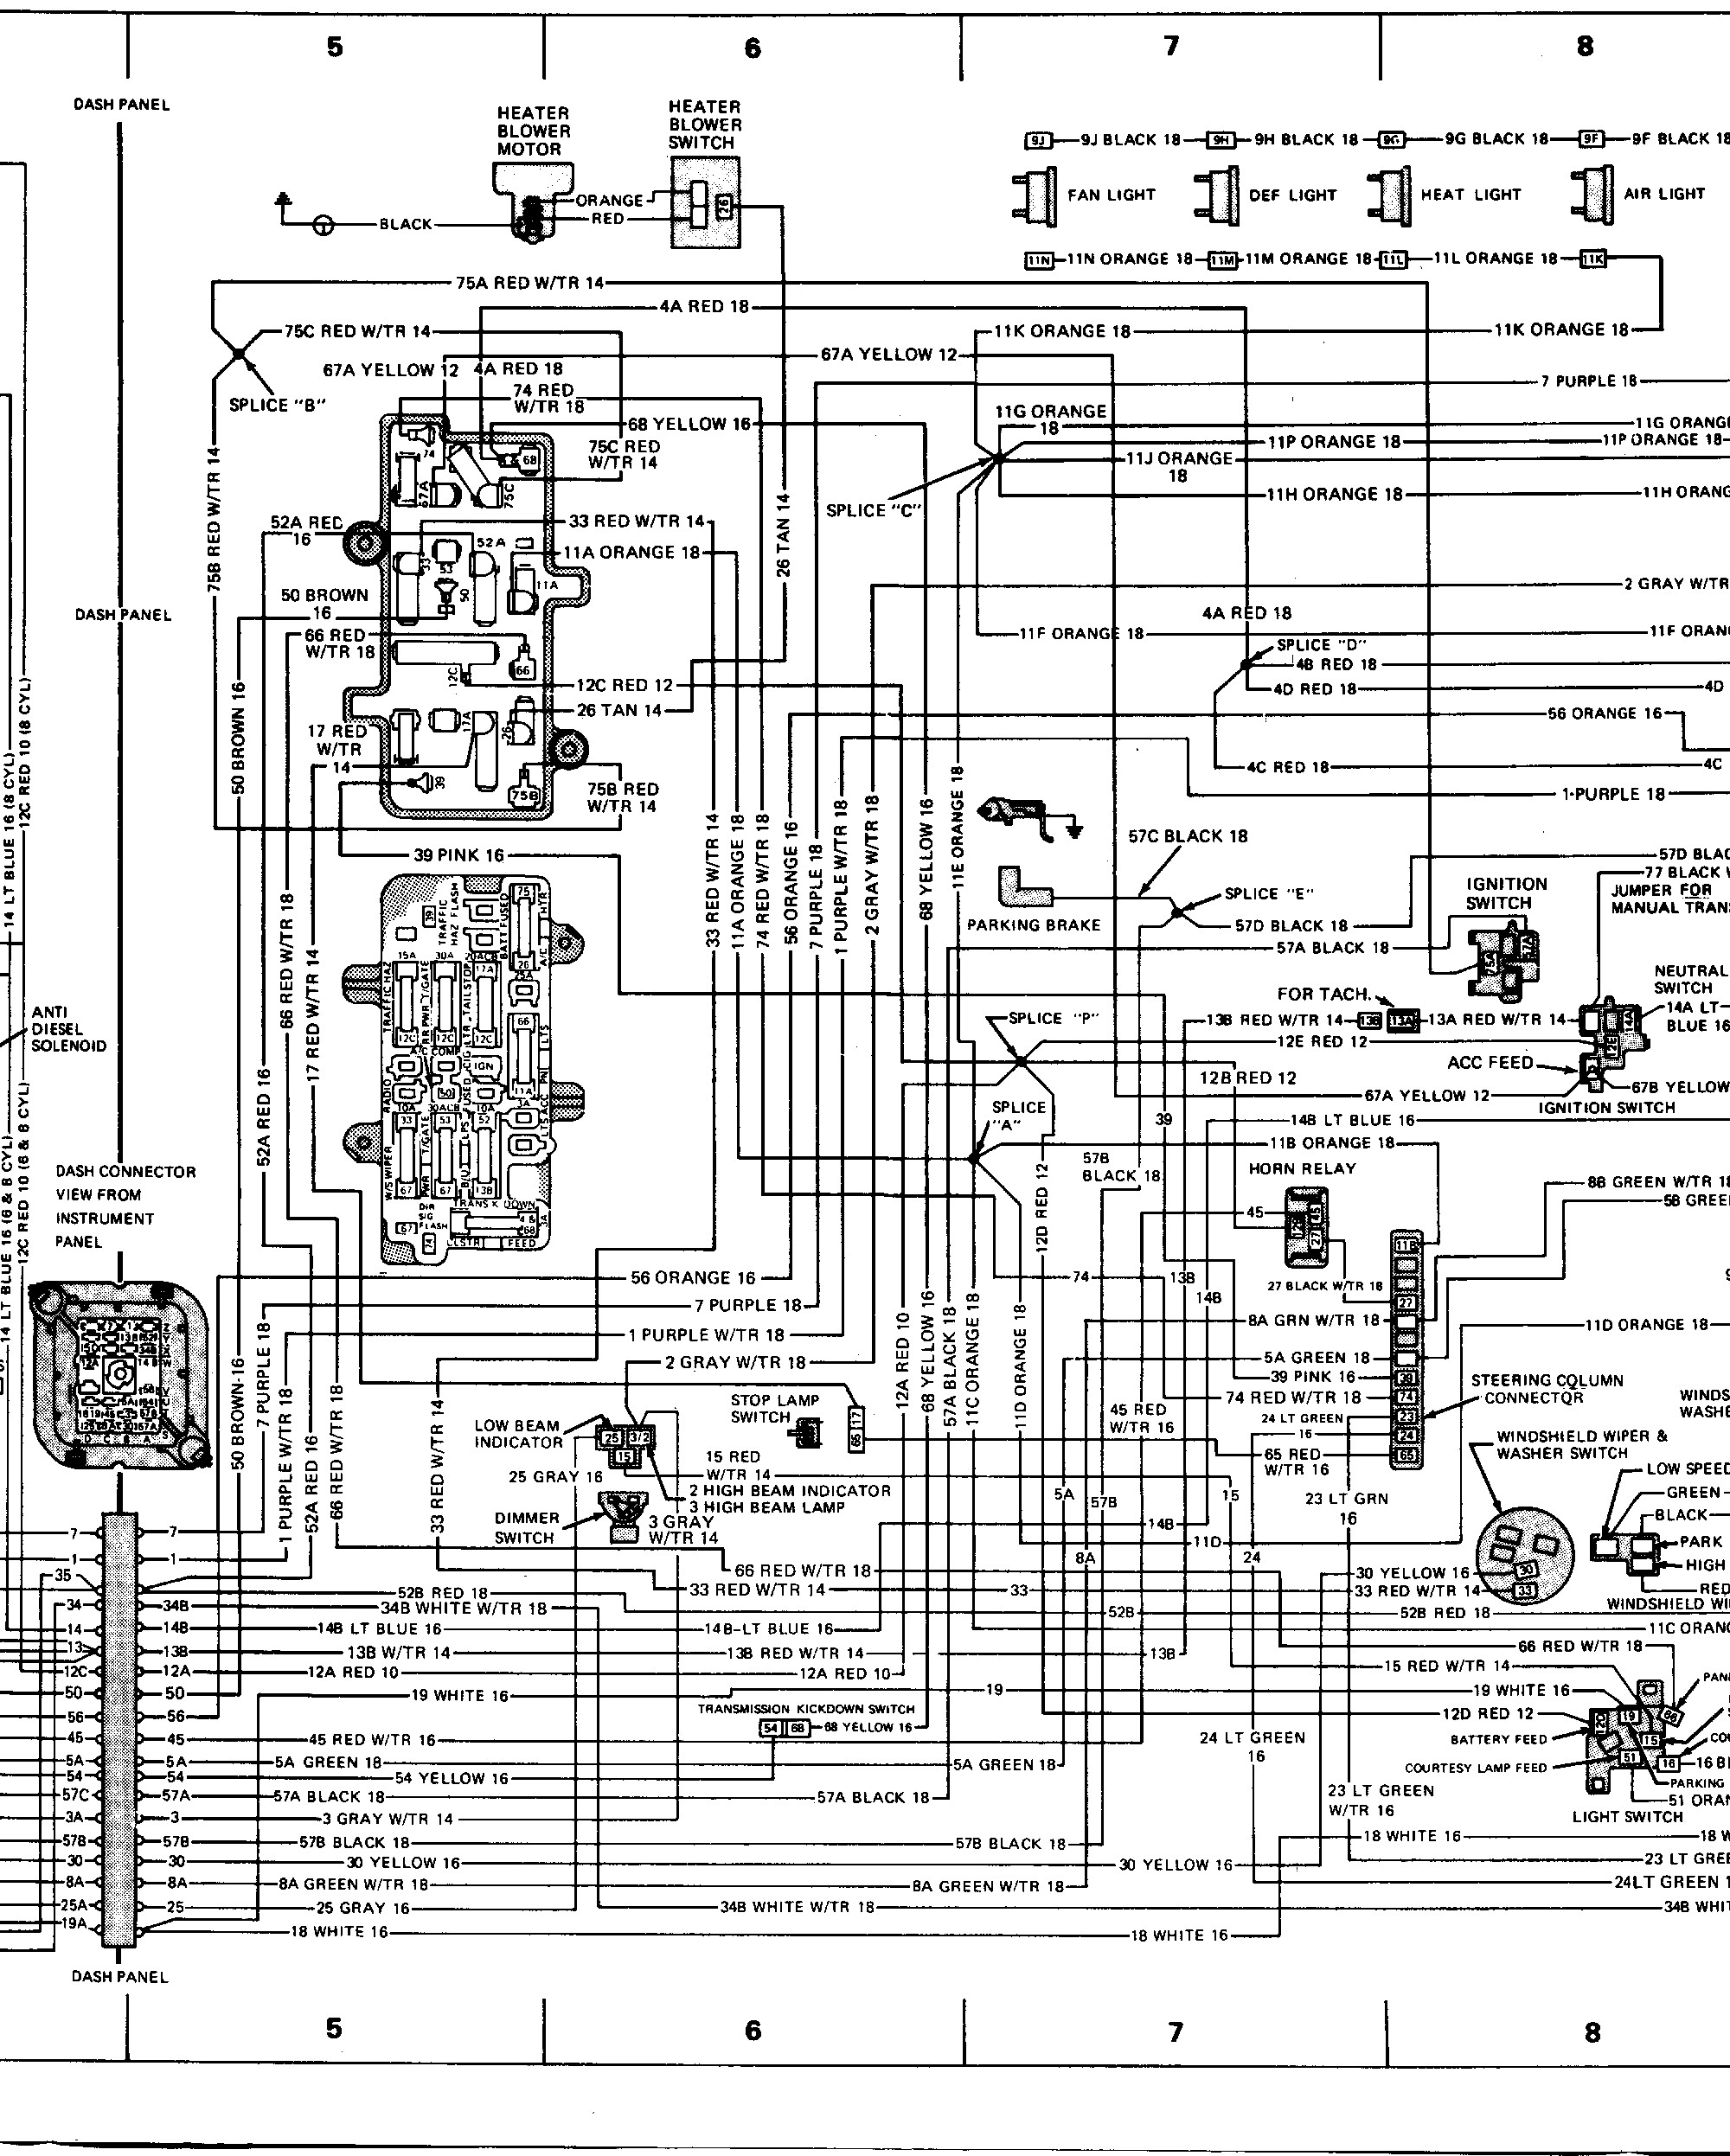 Basic Engine Wiring Diagram 1978 Chevy Truck Wiper Switch Wiring Diagram 1978 Cj5 Wiring Of Basic Engine Wiring Diagram